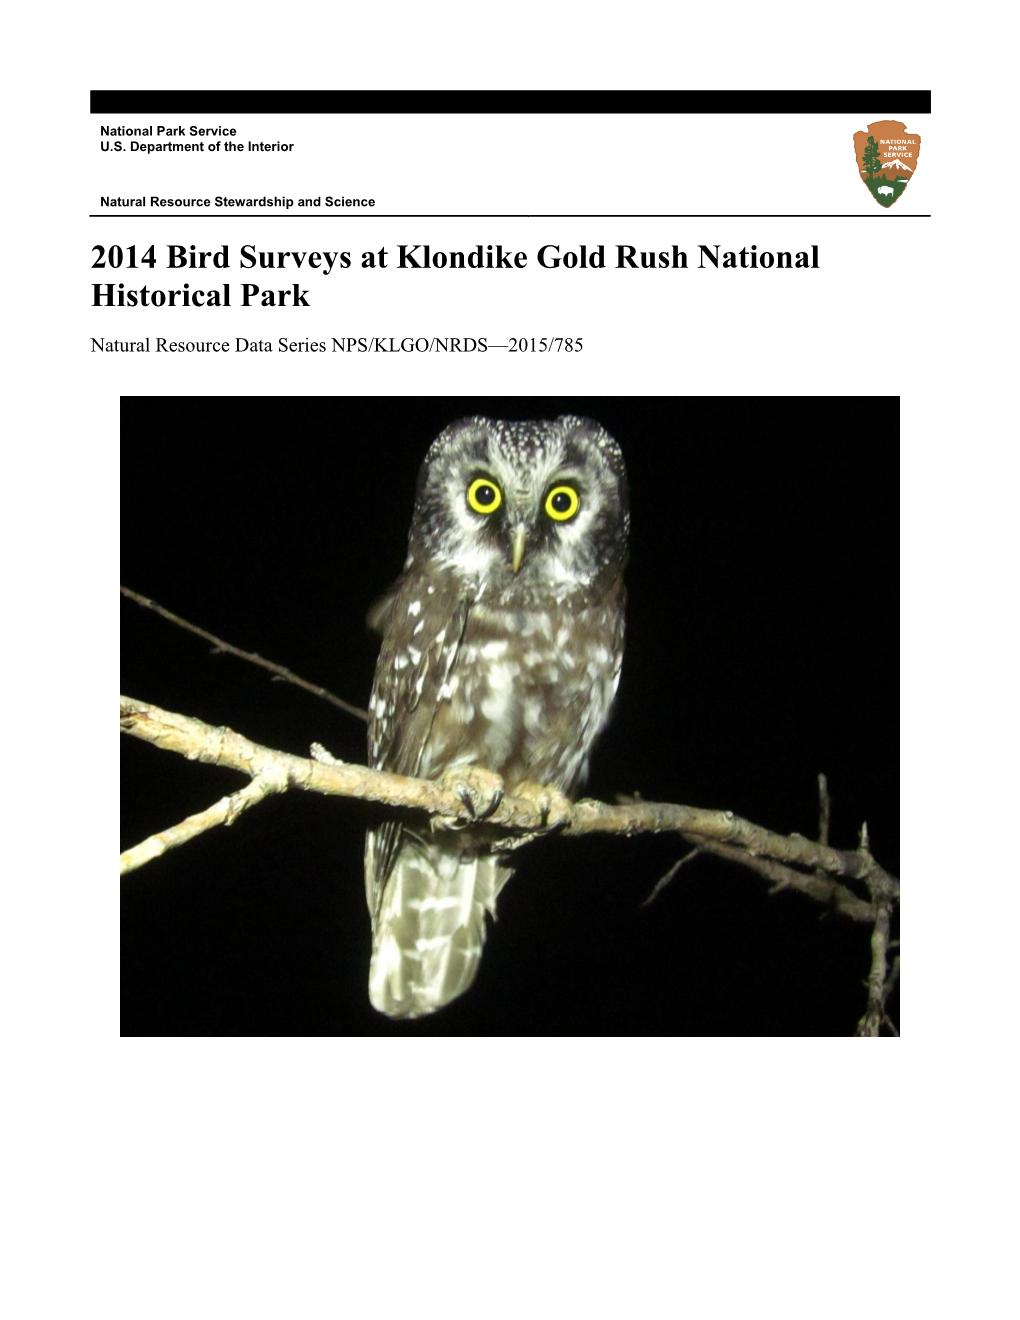 2014 Bird Surveys at Klondike Gold Rush National Historical Park